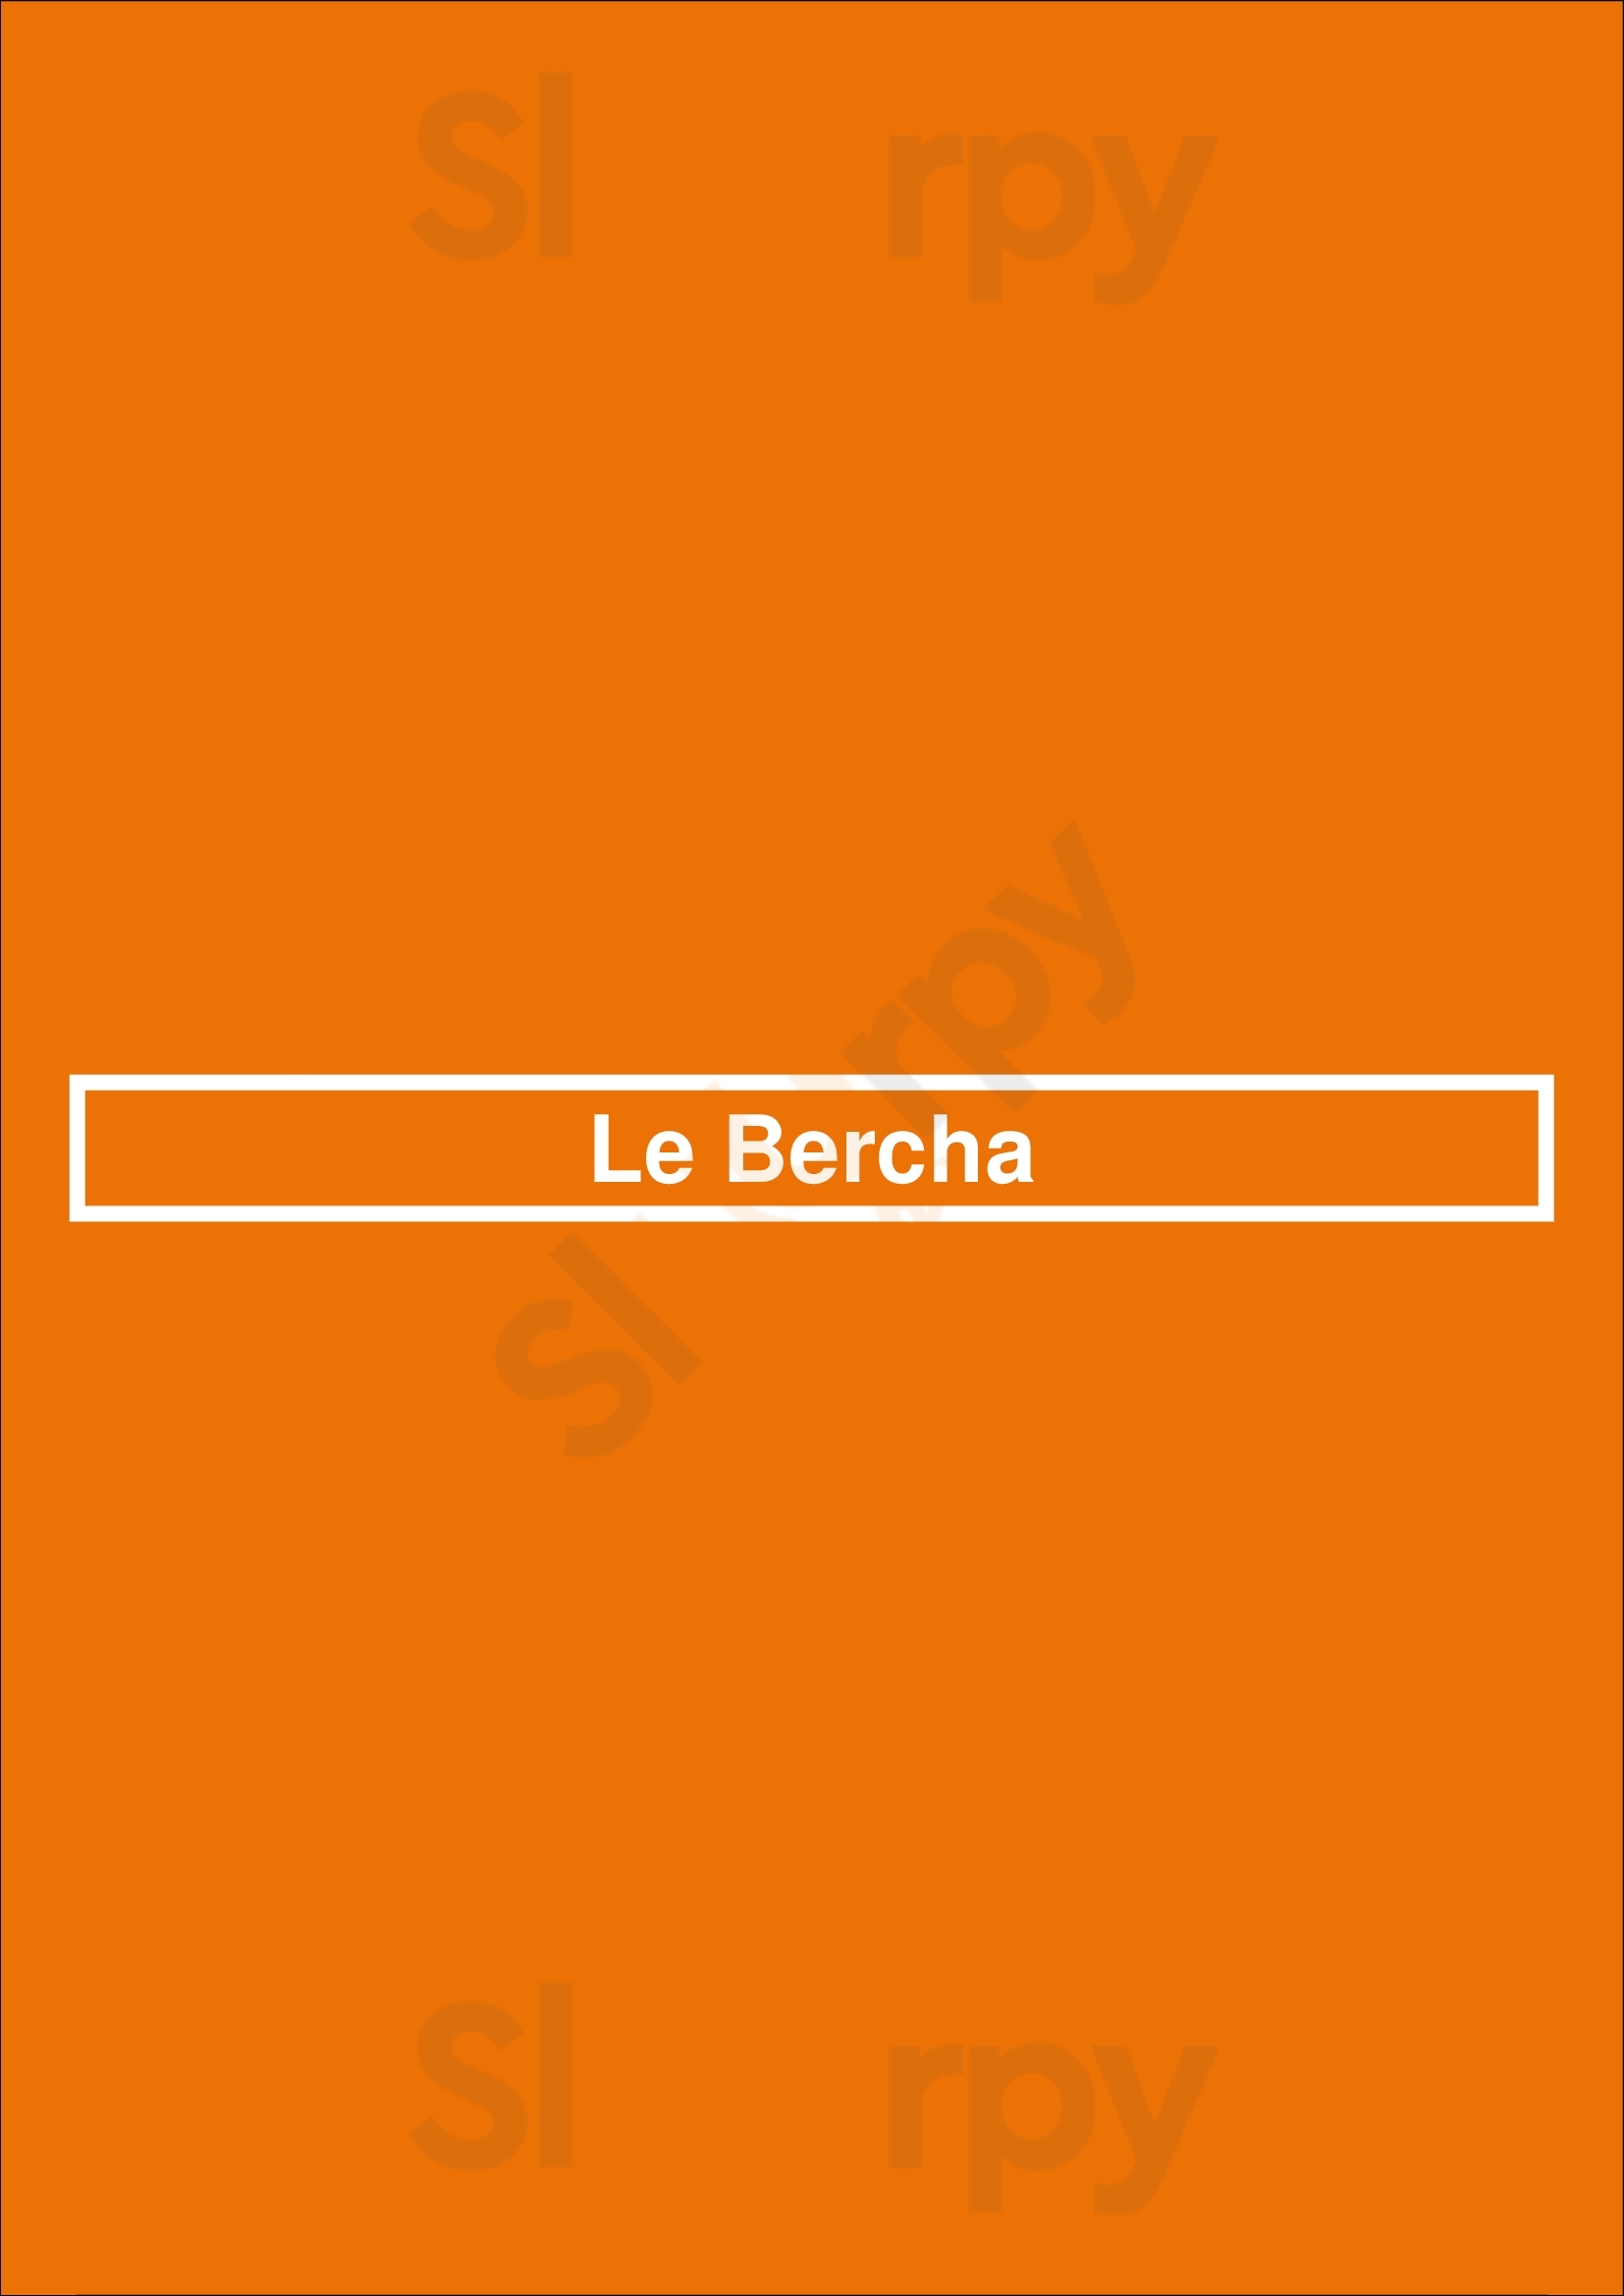 Le Bercha Binche Menu - 1